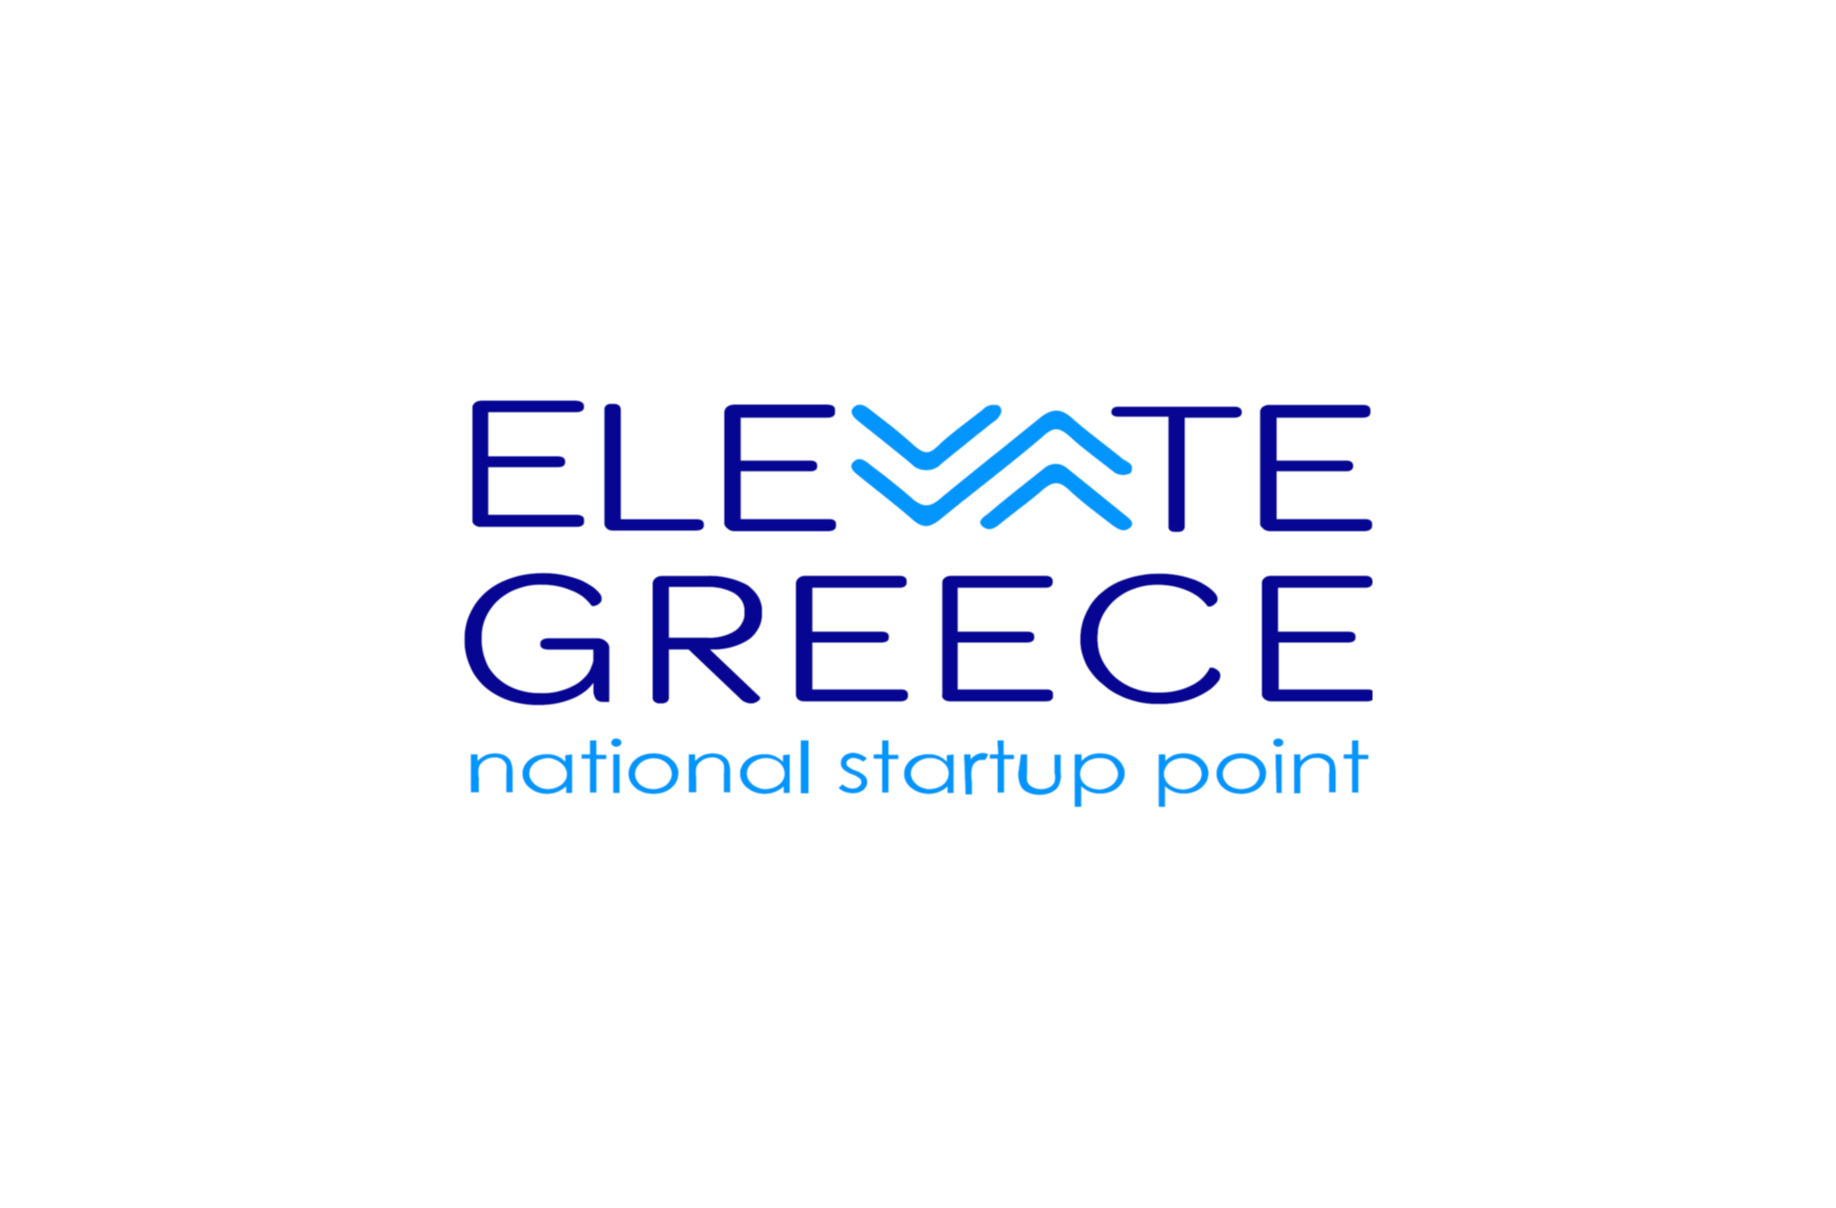 ELEVATE GREECE